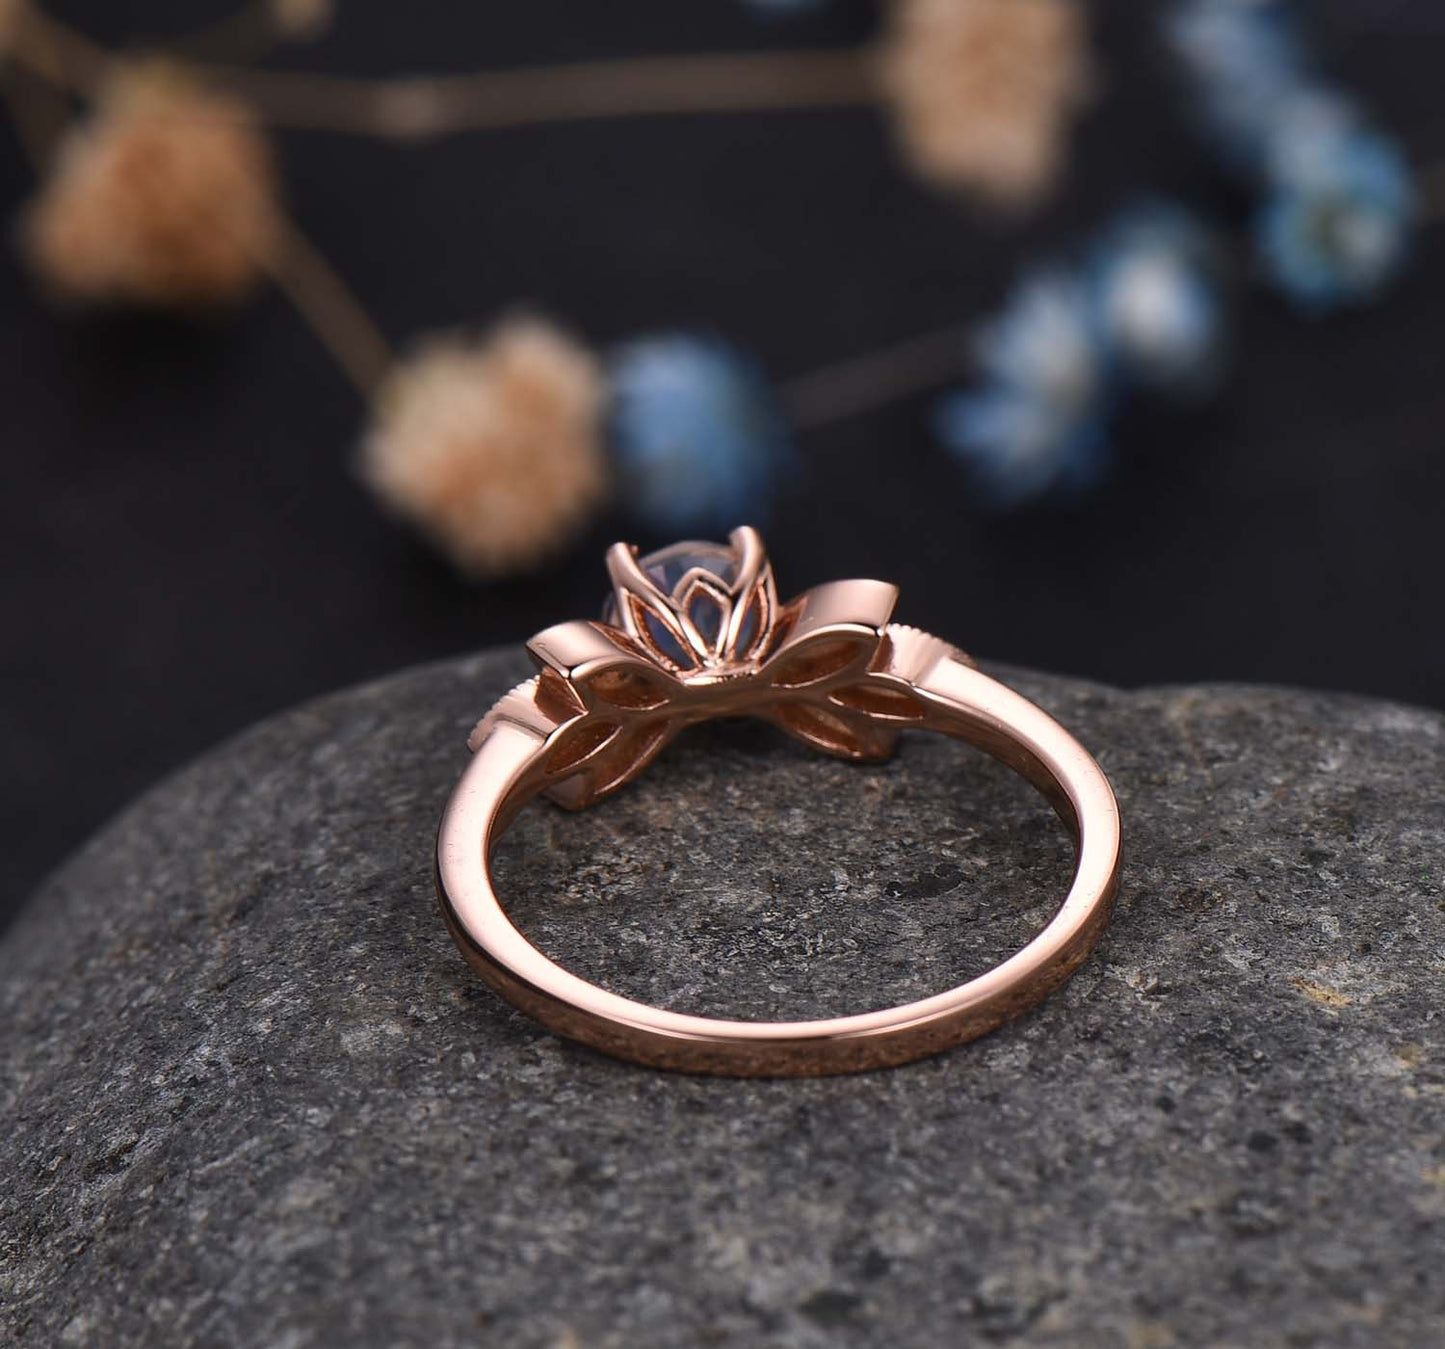 Unique moonstone engagement ring diamond rose gold wedding ring for women flower design jewelry natural gemstone anniversary birthday gift